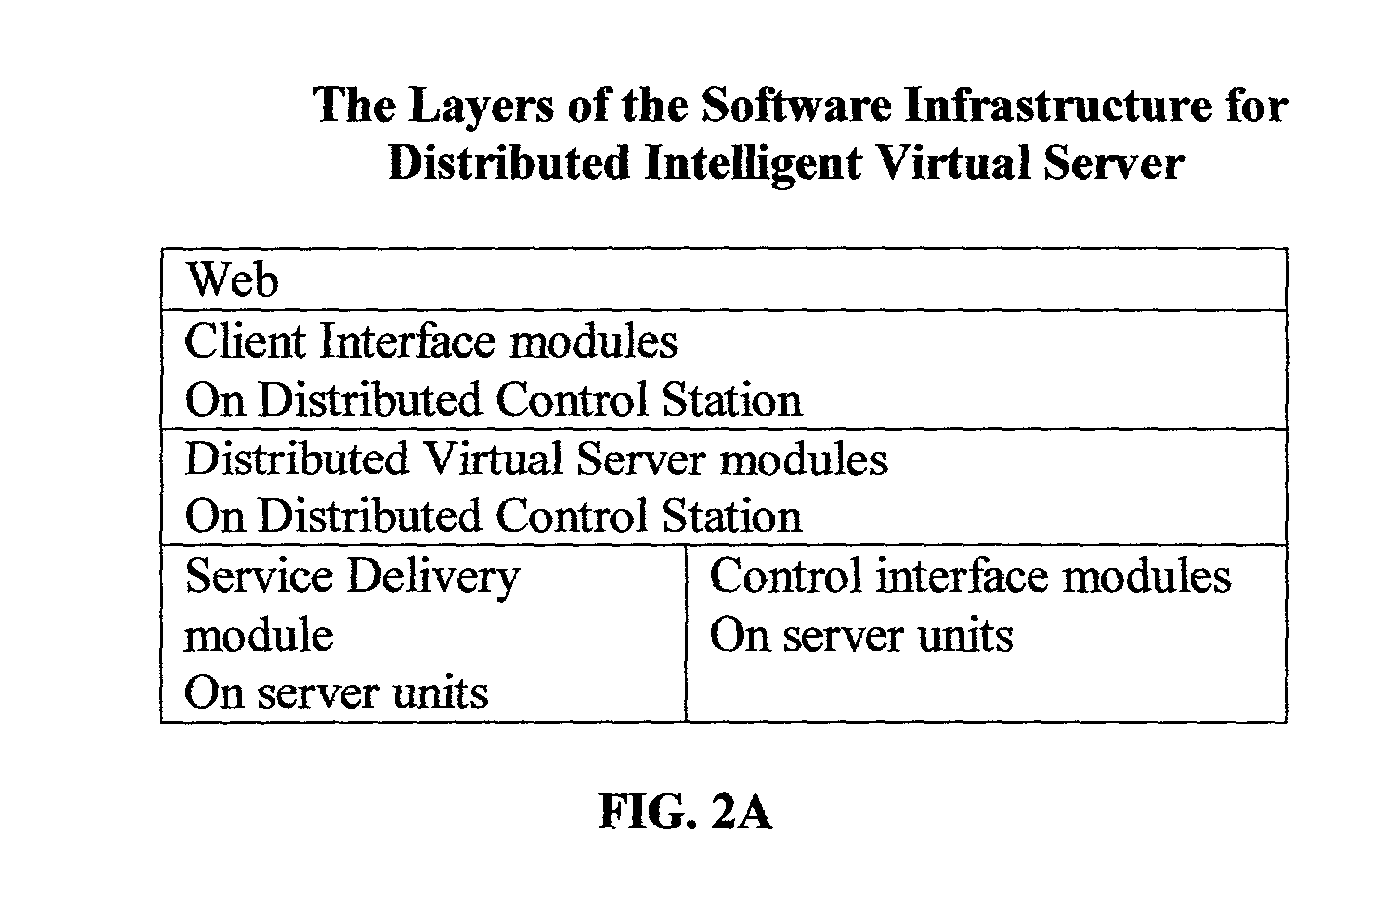 Distributed intelligent virtual server